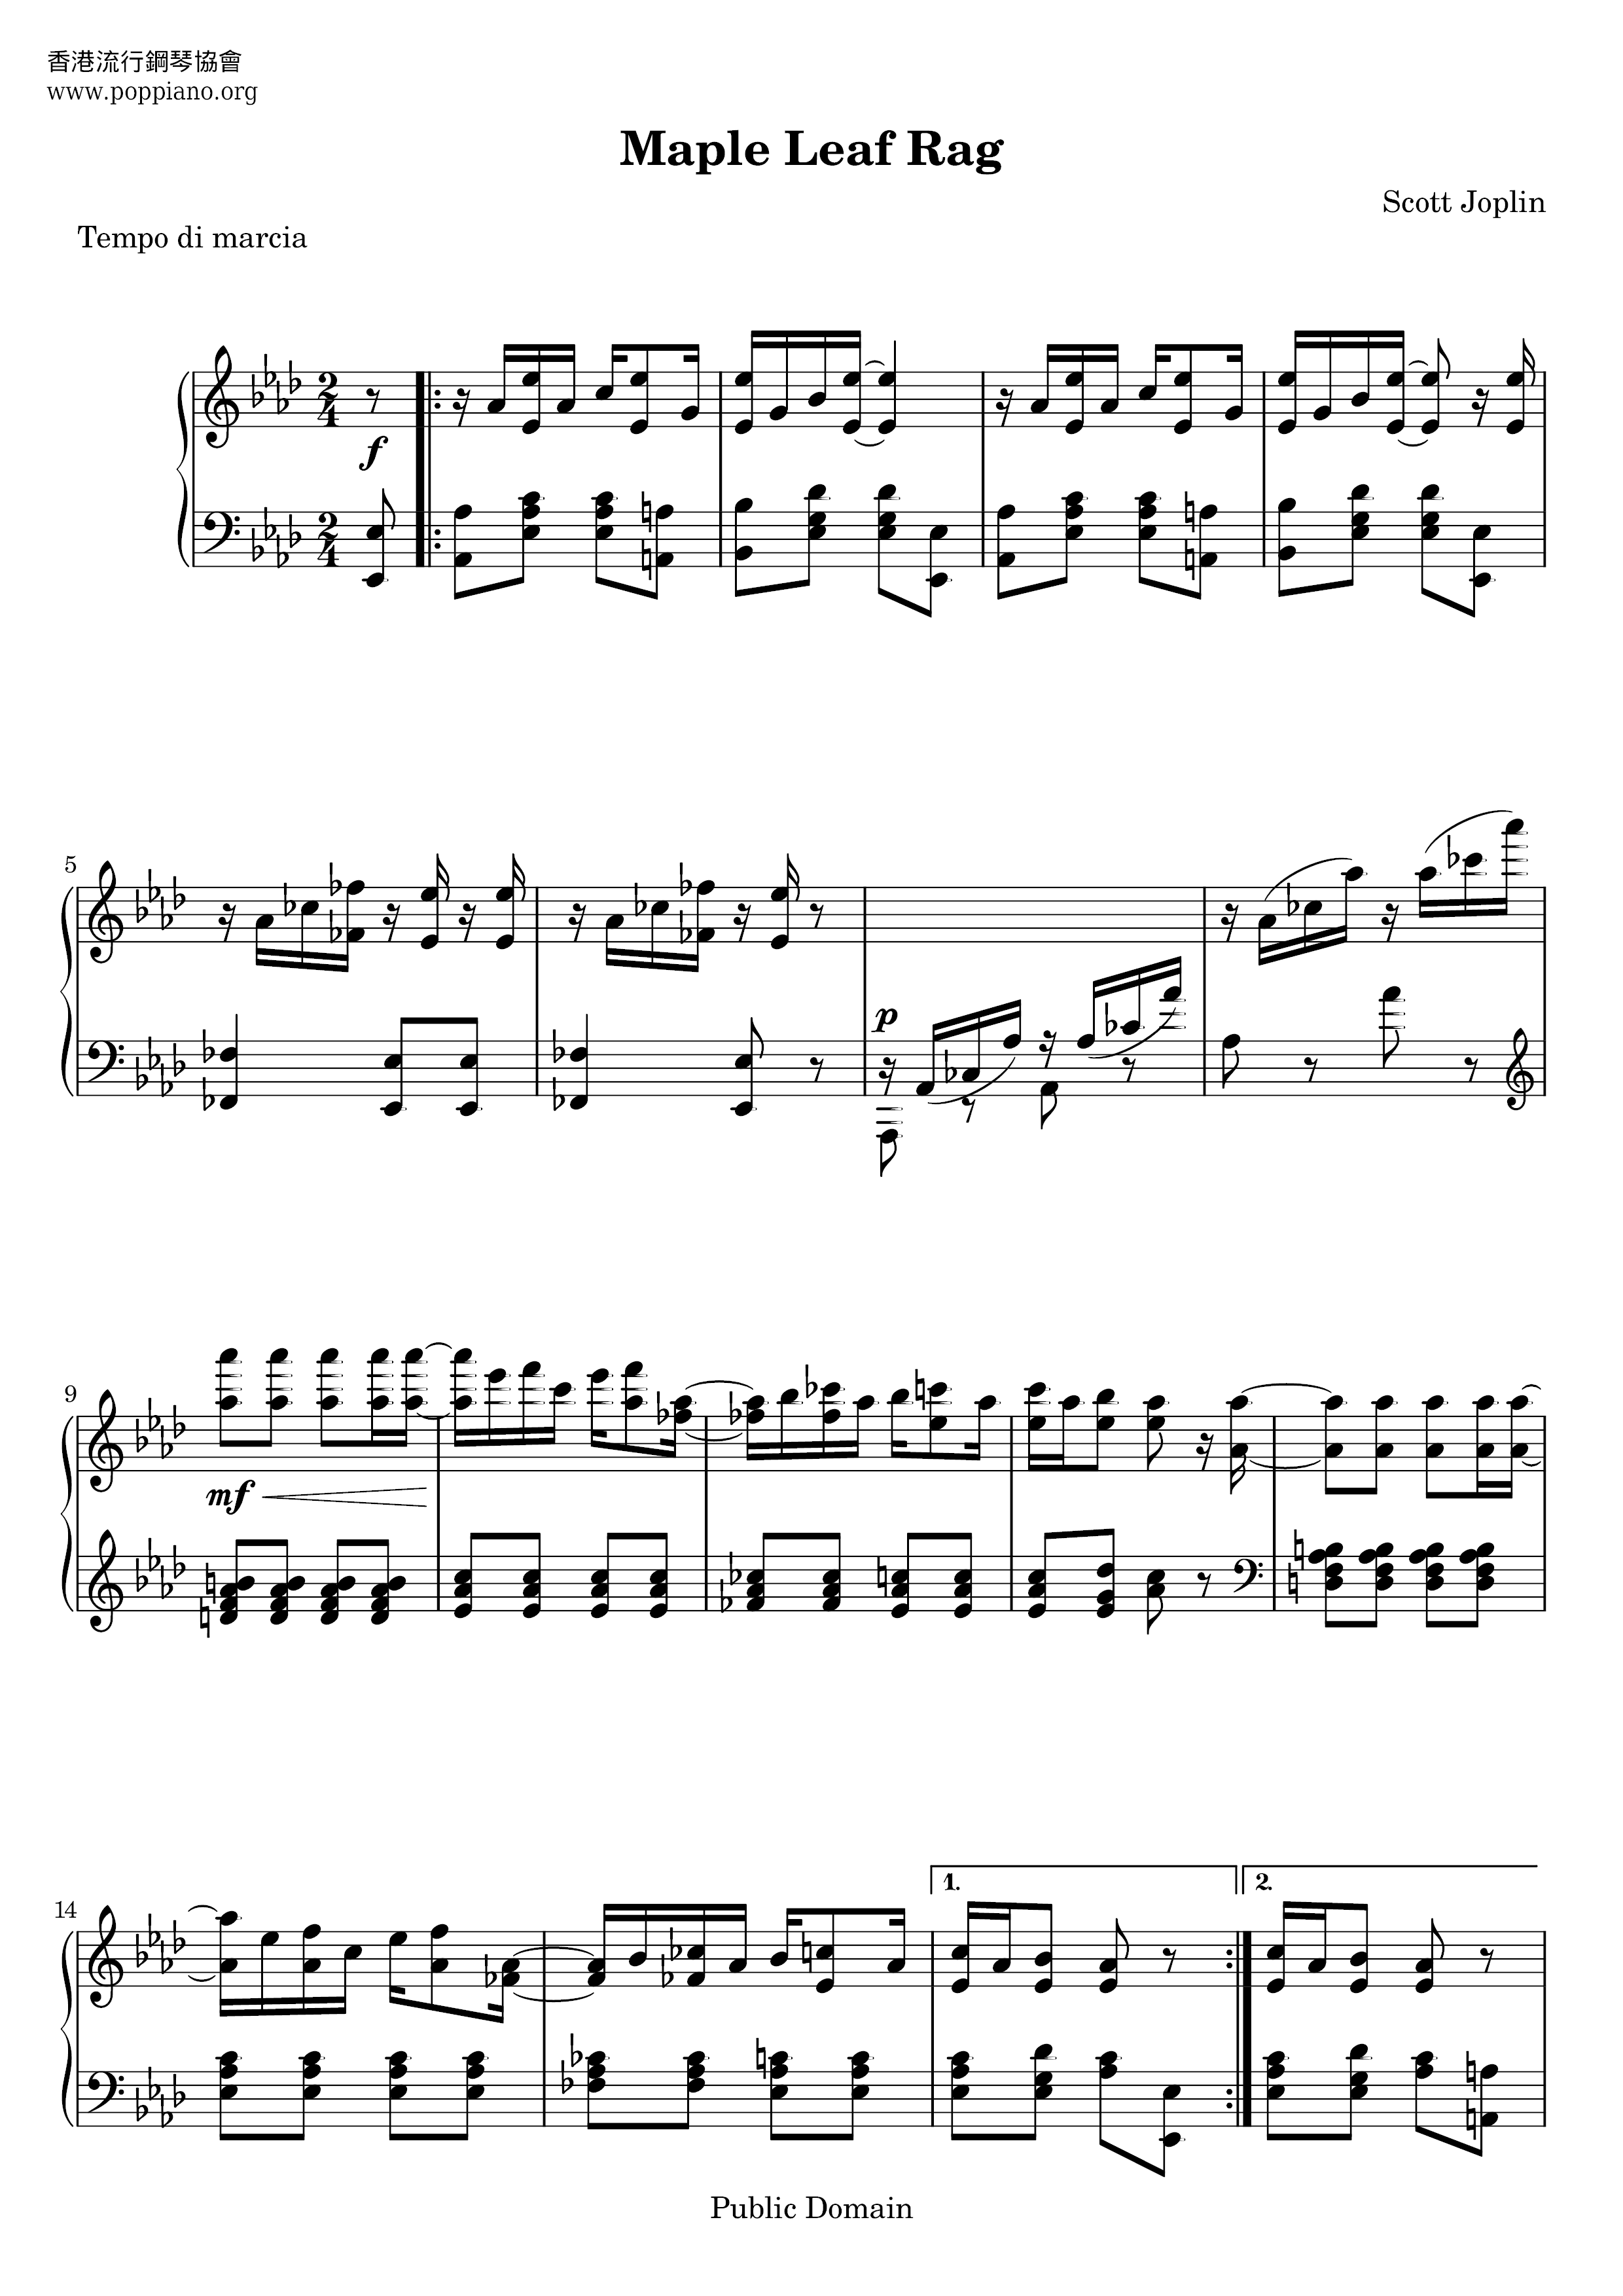 løbetur amerikansk dollar Perennial ☆ Scott Joplin-Maple Leaf Rag Sheet Music pdf, - Free Score Download ☆